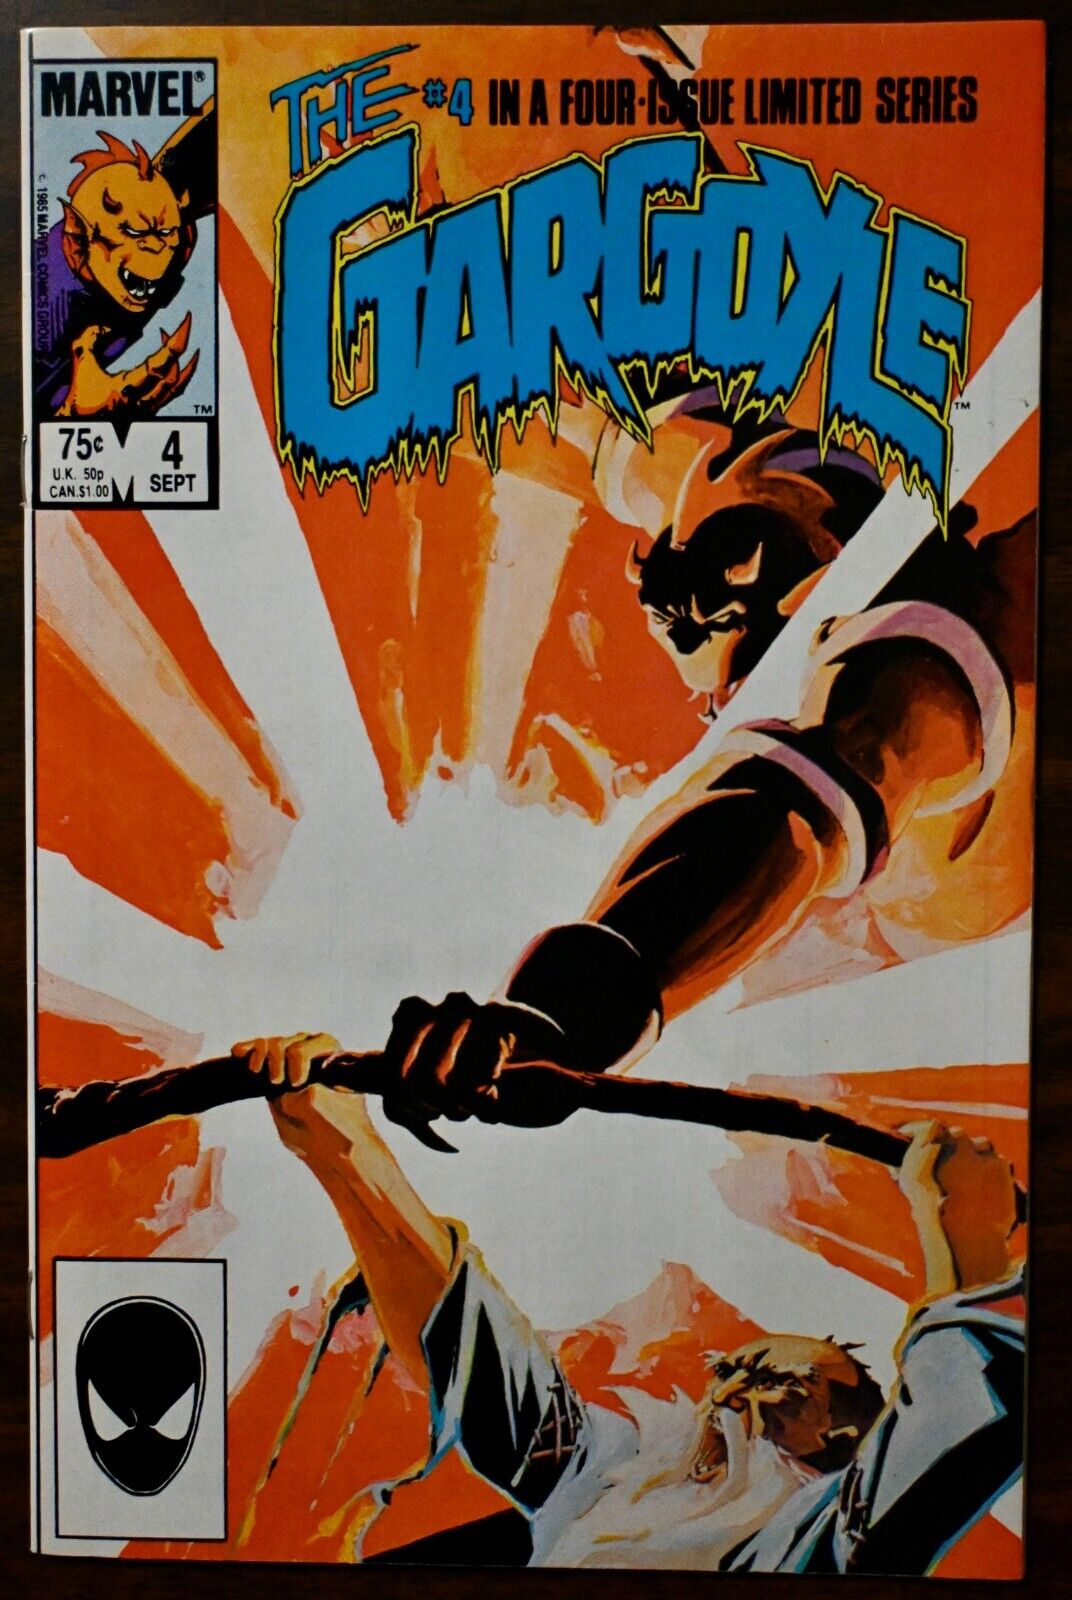 MARVEL Comics (1985) - The Gargoyle #4 of 4 Limited Series